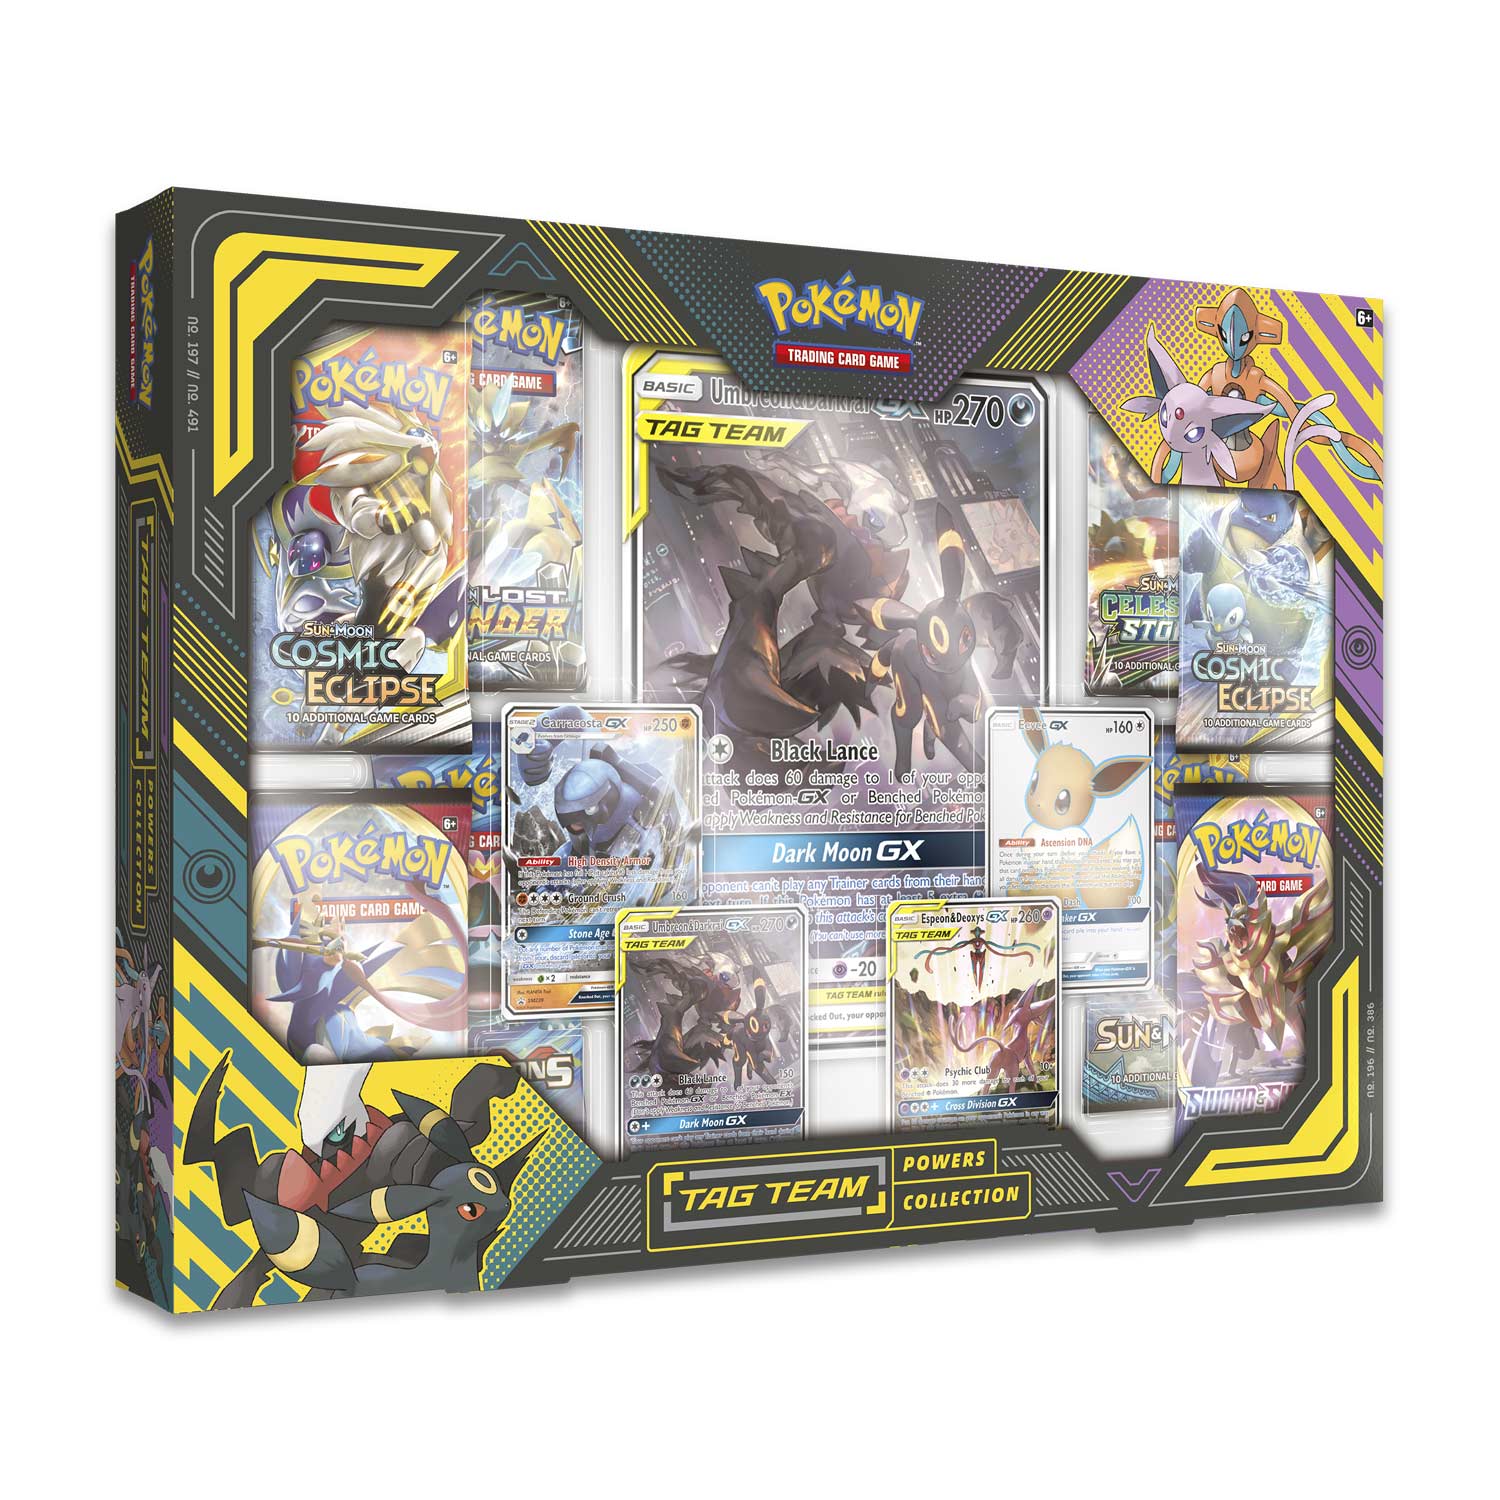 Pokemon TAG TEAM Powers Box Collection Umbreon & Darkrai-GX Promo CardSealed 